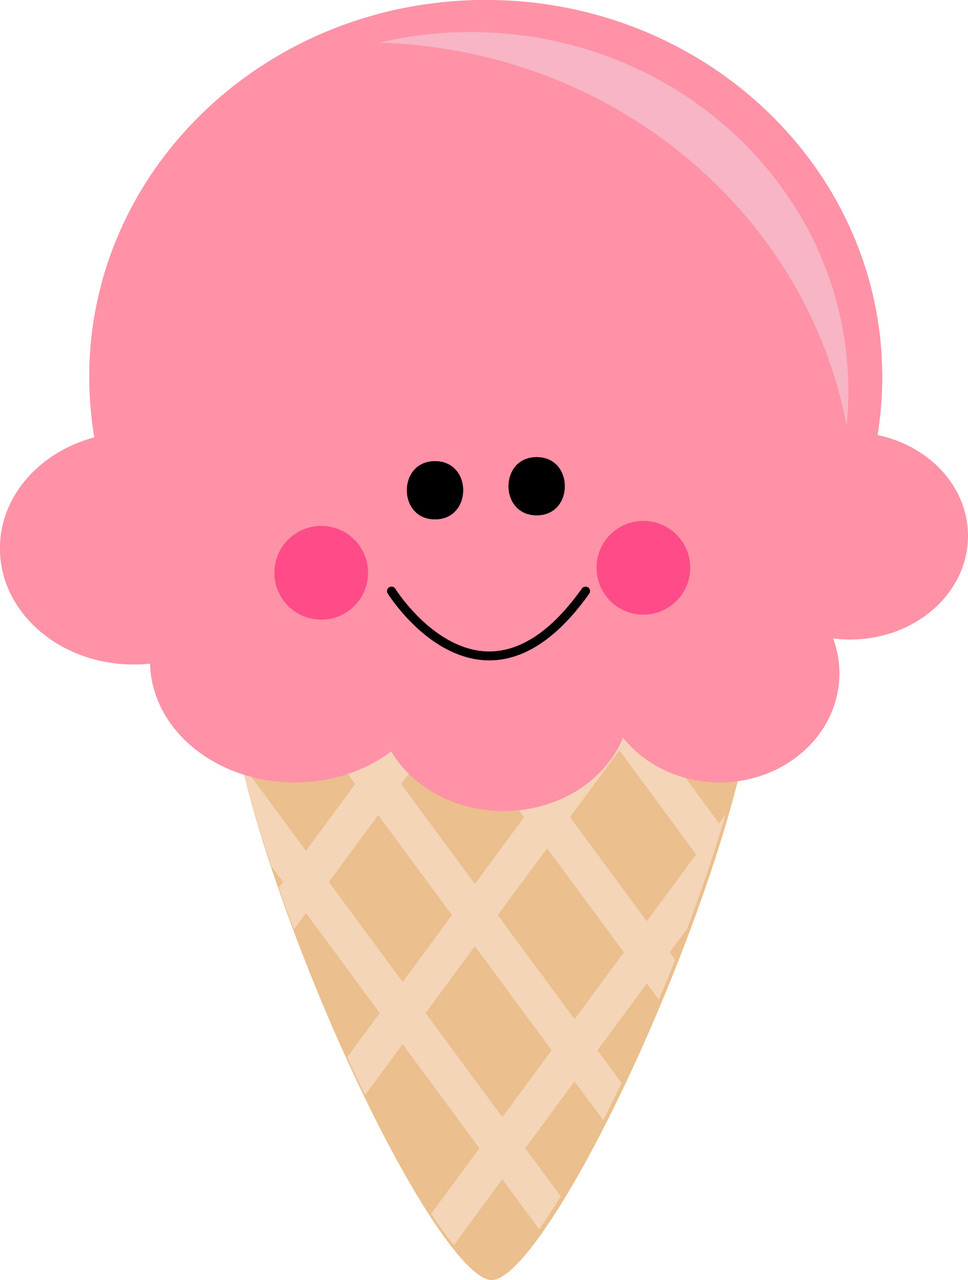 Cute Animated Ice Cream Cone | About Animals